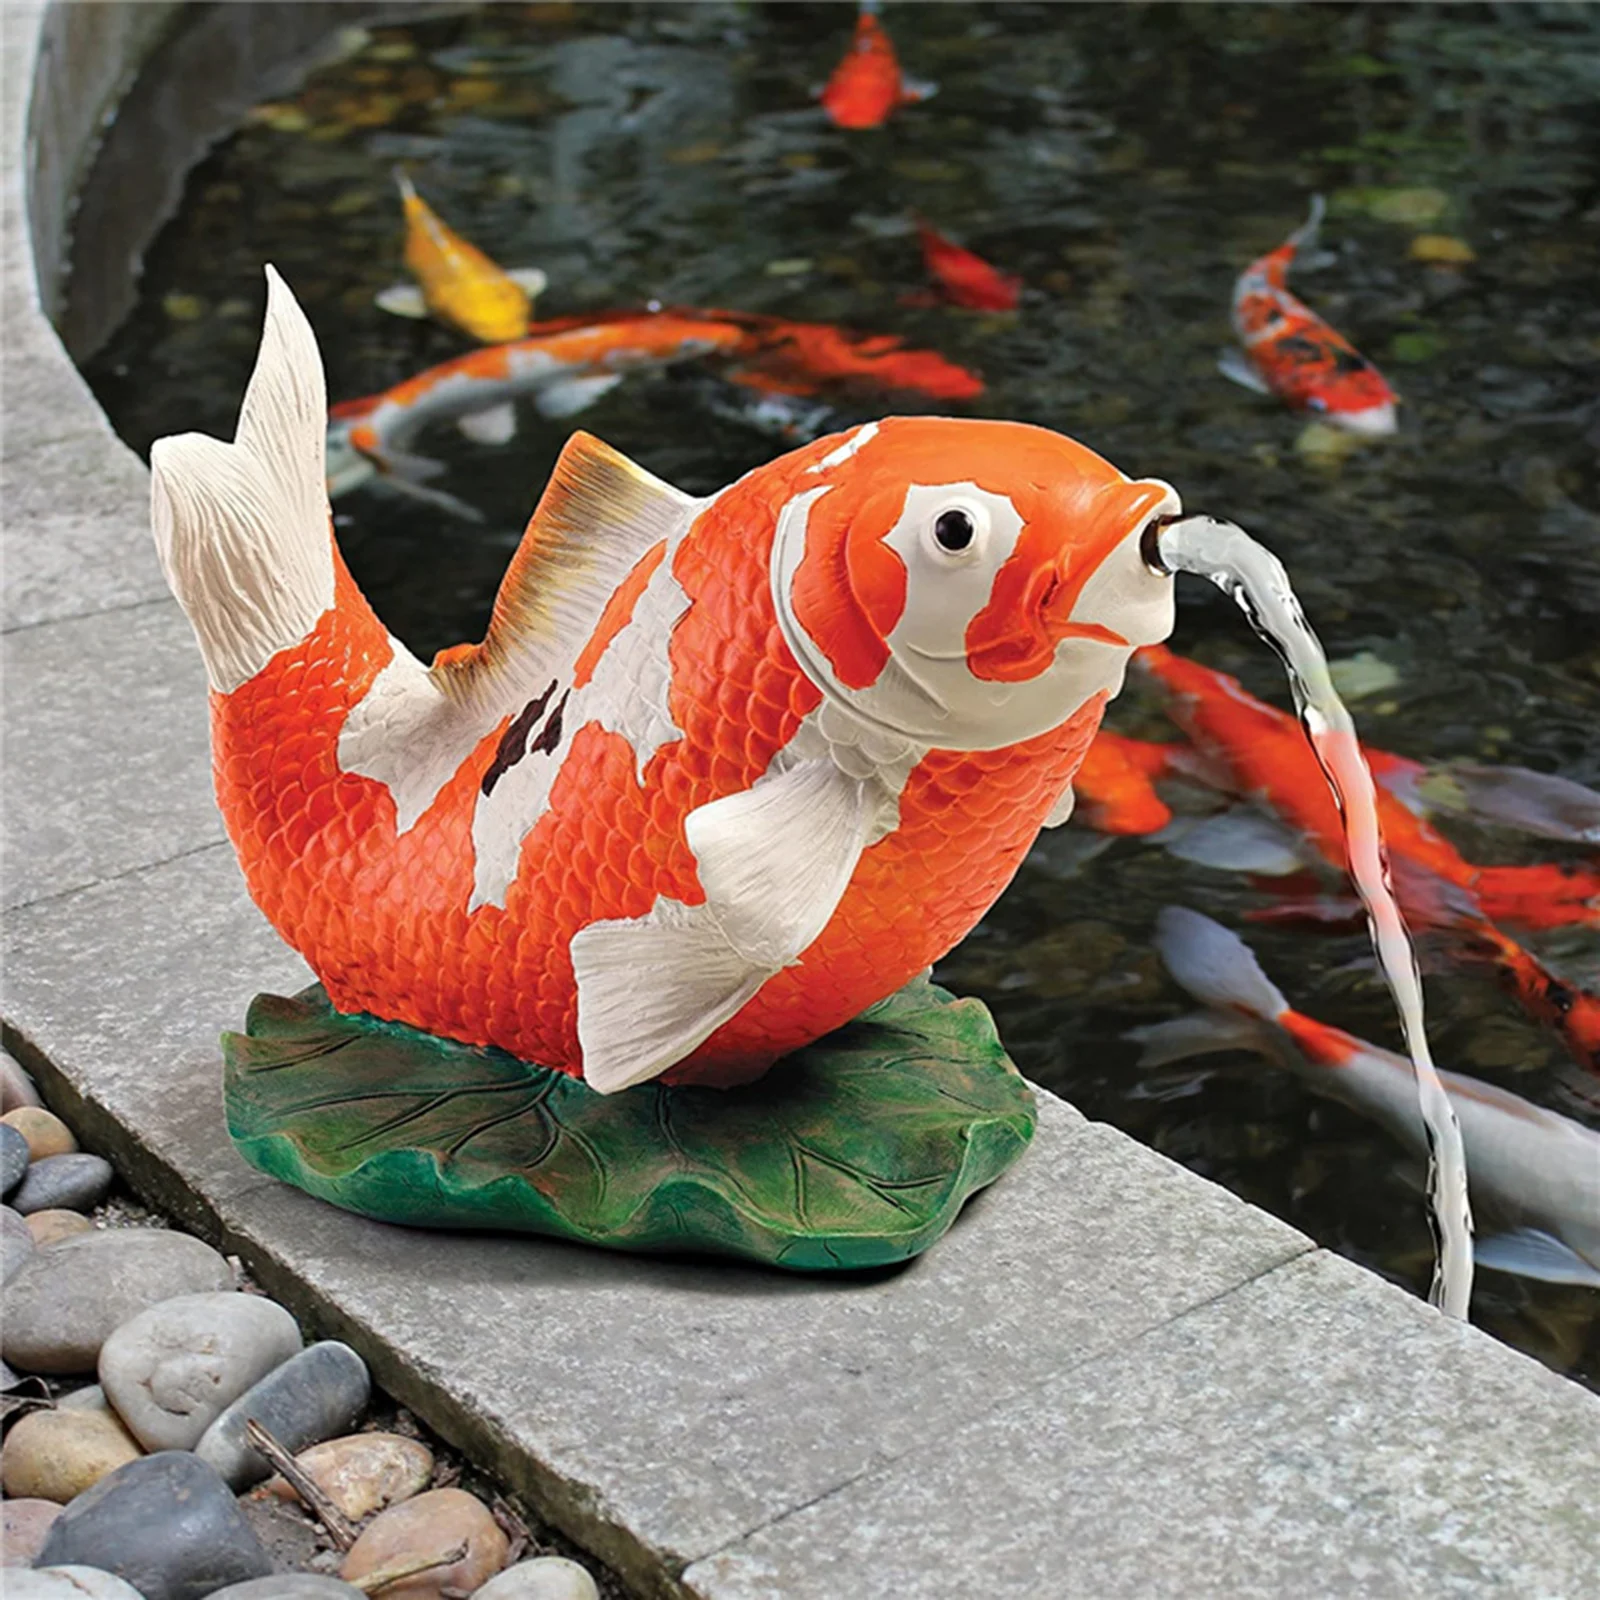 Pond Spitter Statue Figurine Resin Fish Lucky Sculpture Desktop Ornament Garden Fountains And Water Features Pond Decor